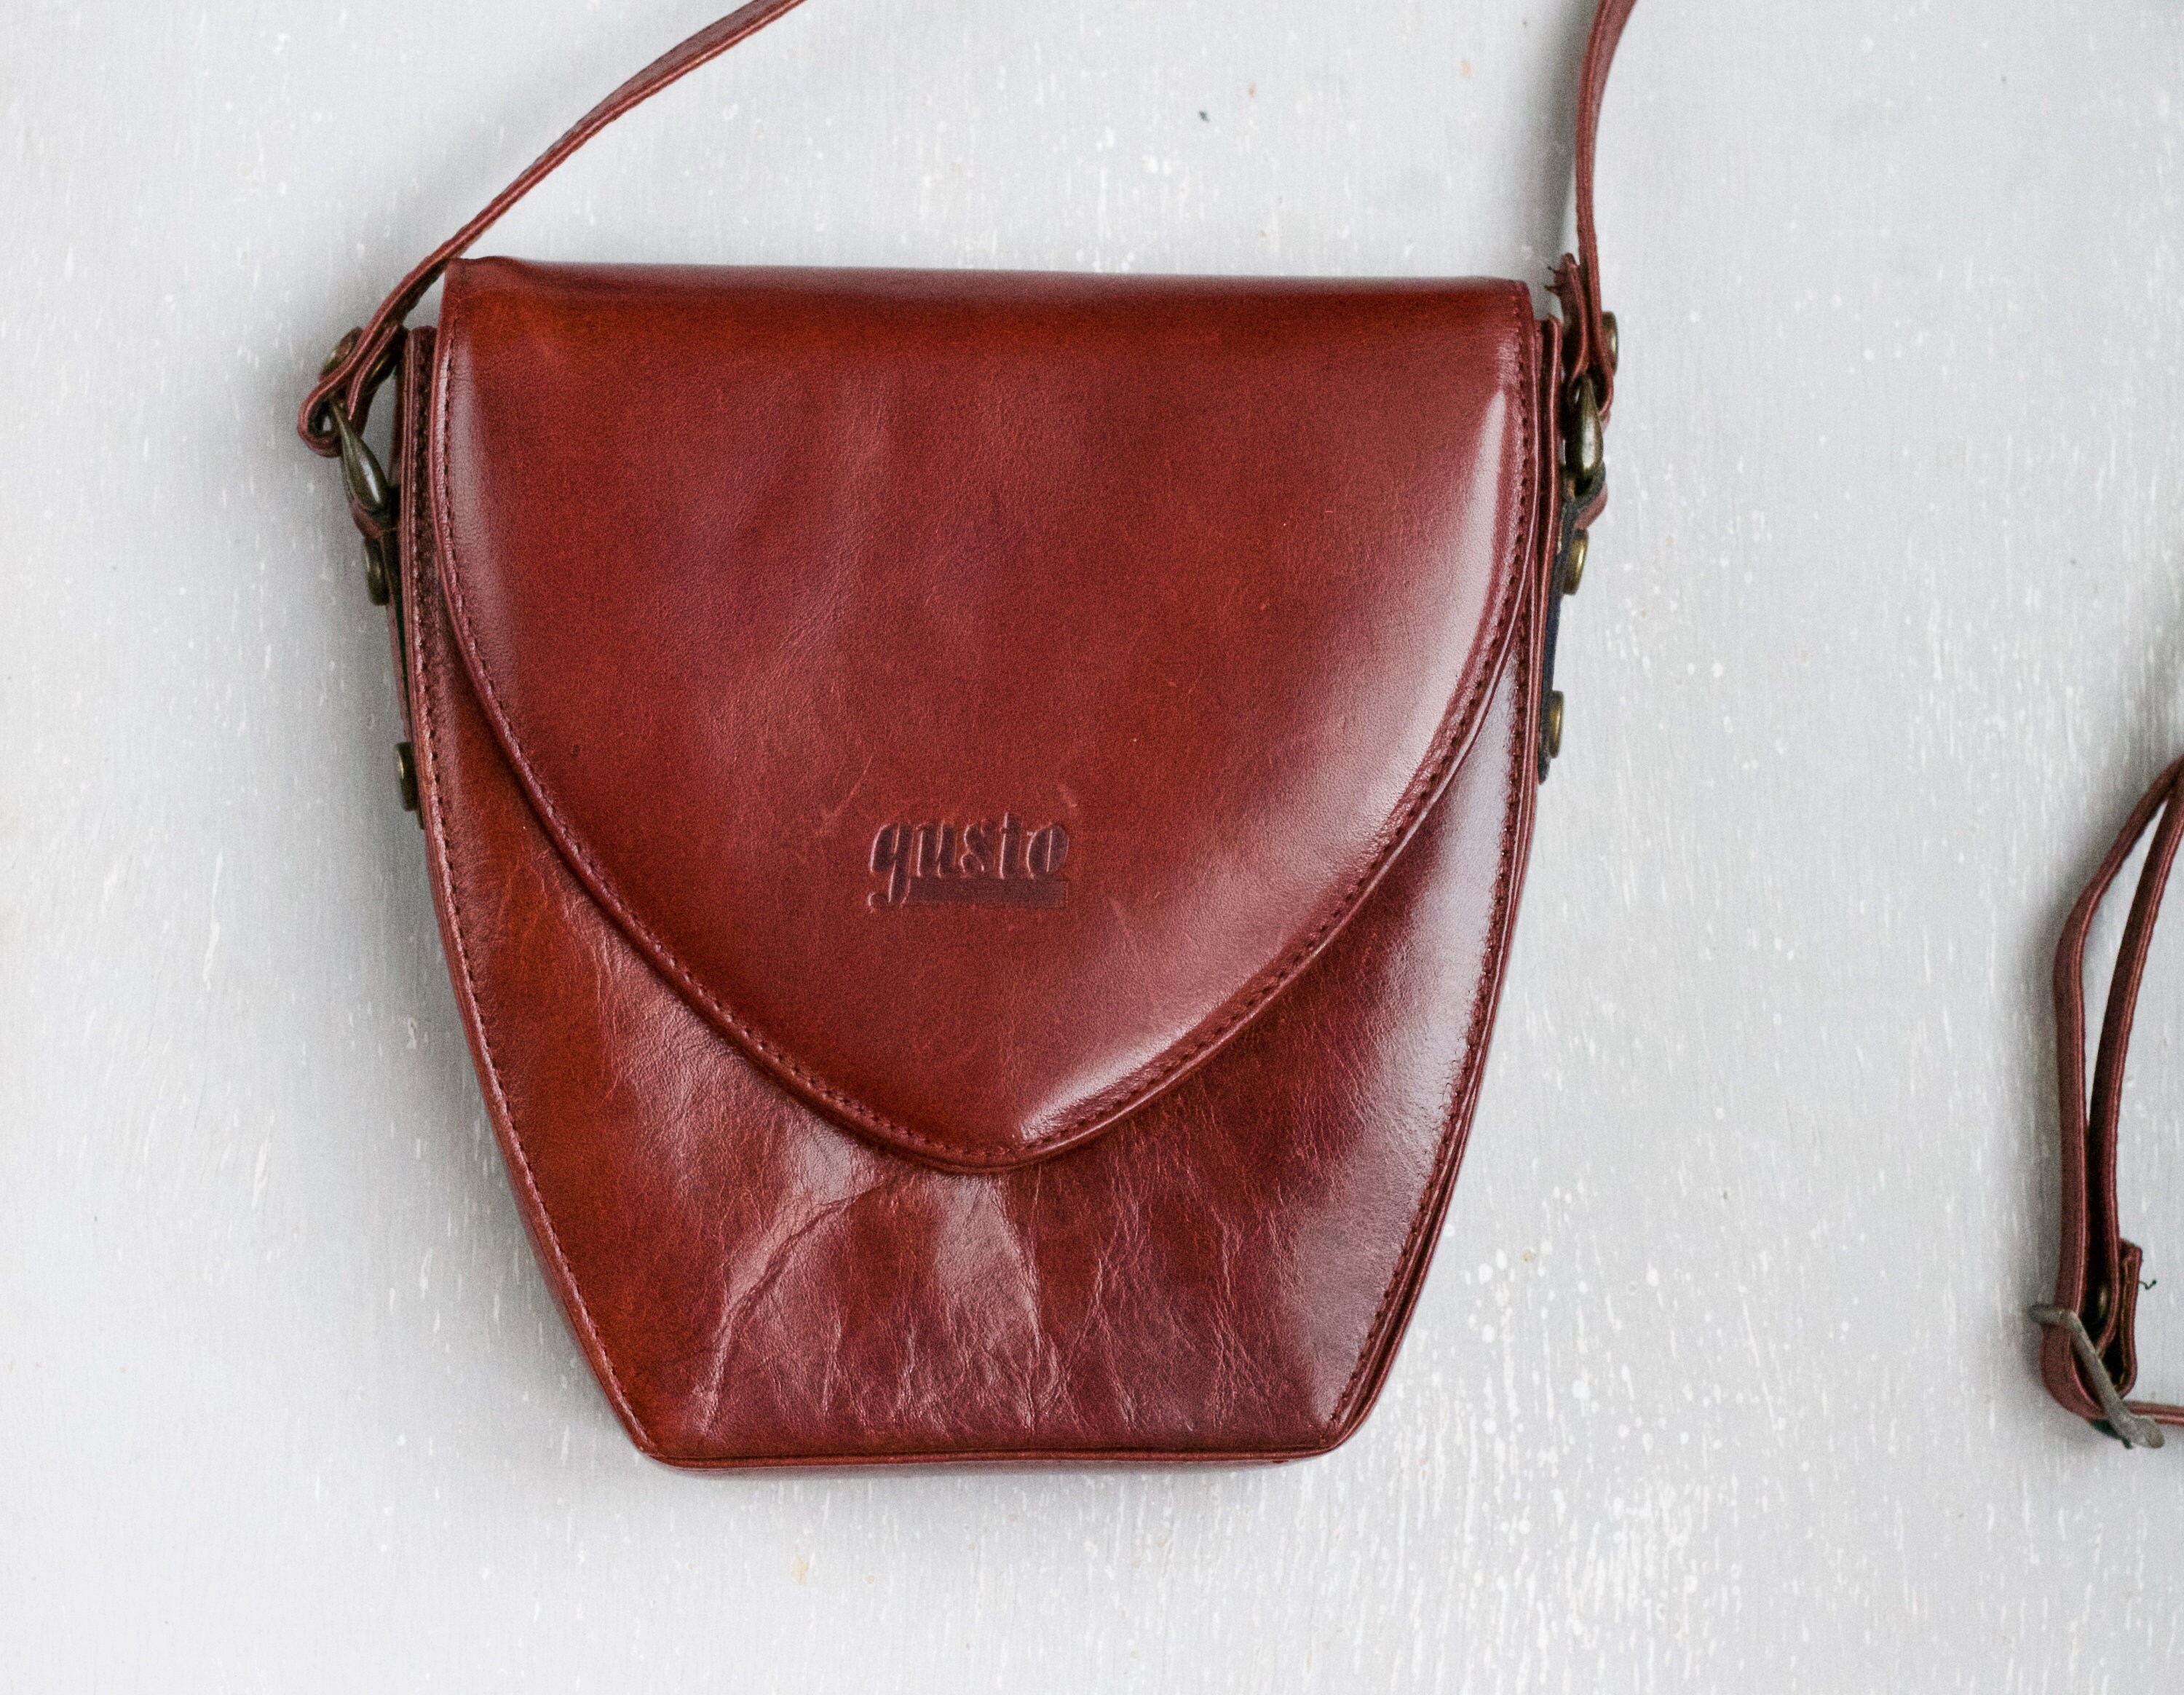 GUSTTO Brown Leather Large Tote Bag Hobo Satchel Handbag | eBay